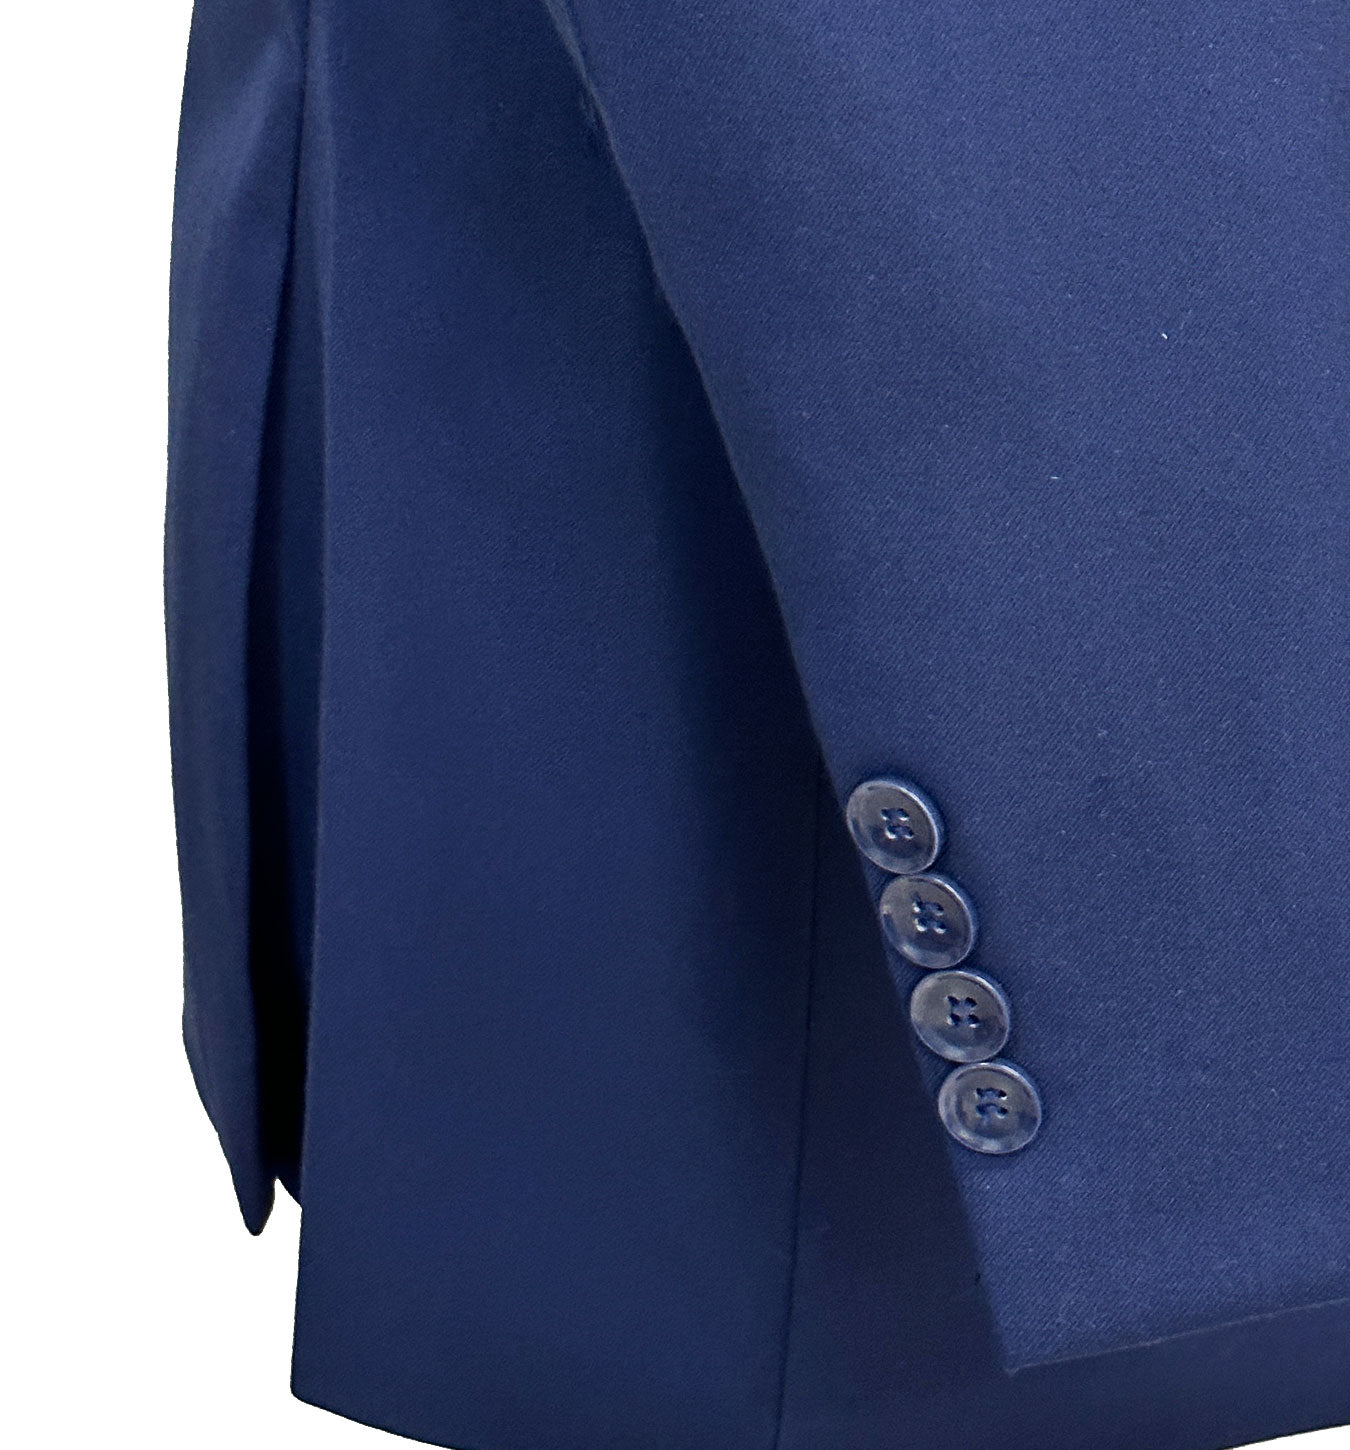 Modern Fit Paris Menswear Mazari Suit 1500 - Vested – Blue MDZ